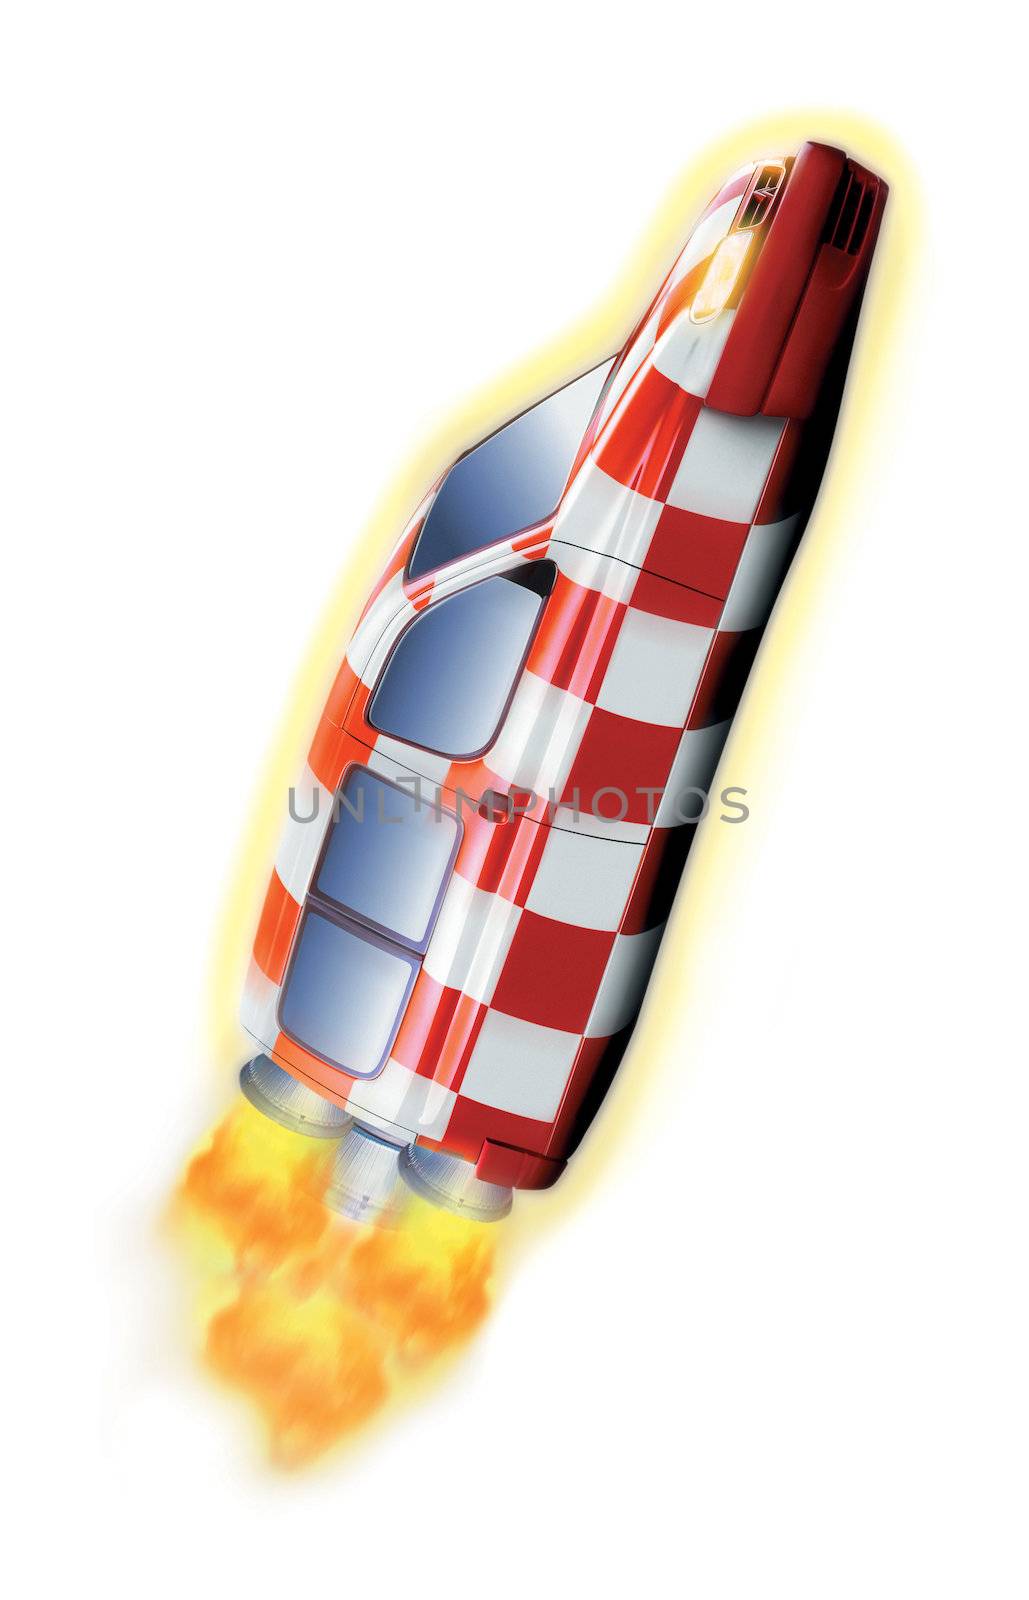 Illustration of a concept car - rocket